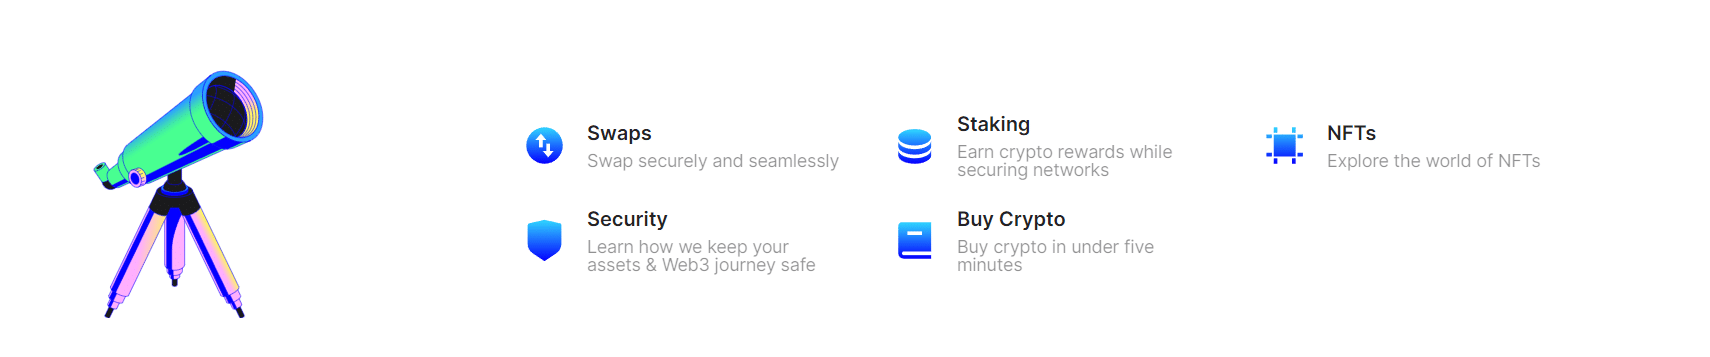 key features of Trust wallet, a screenshot of official website